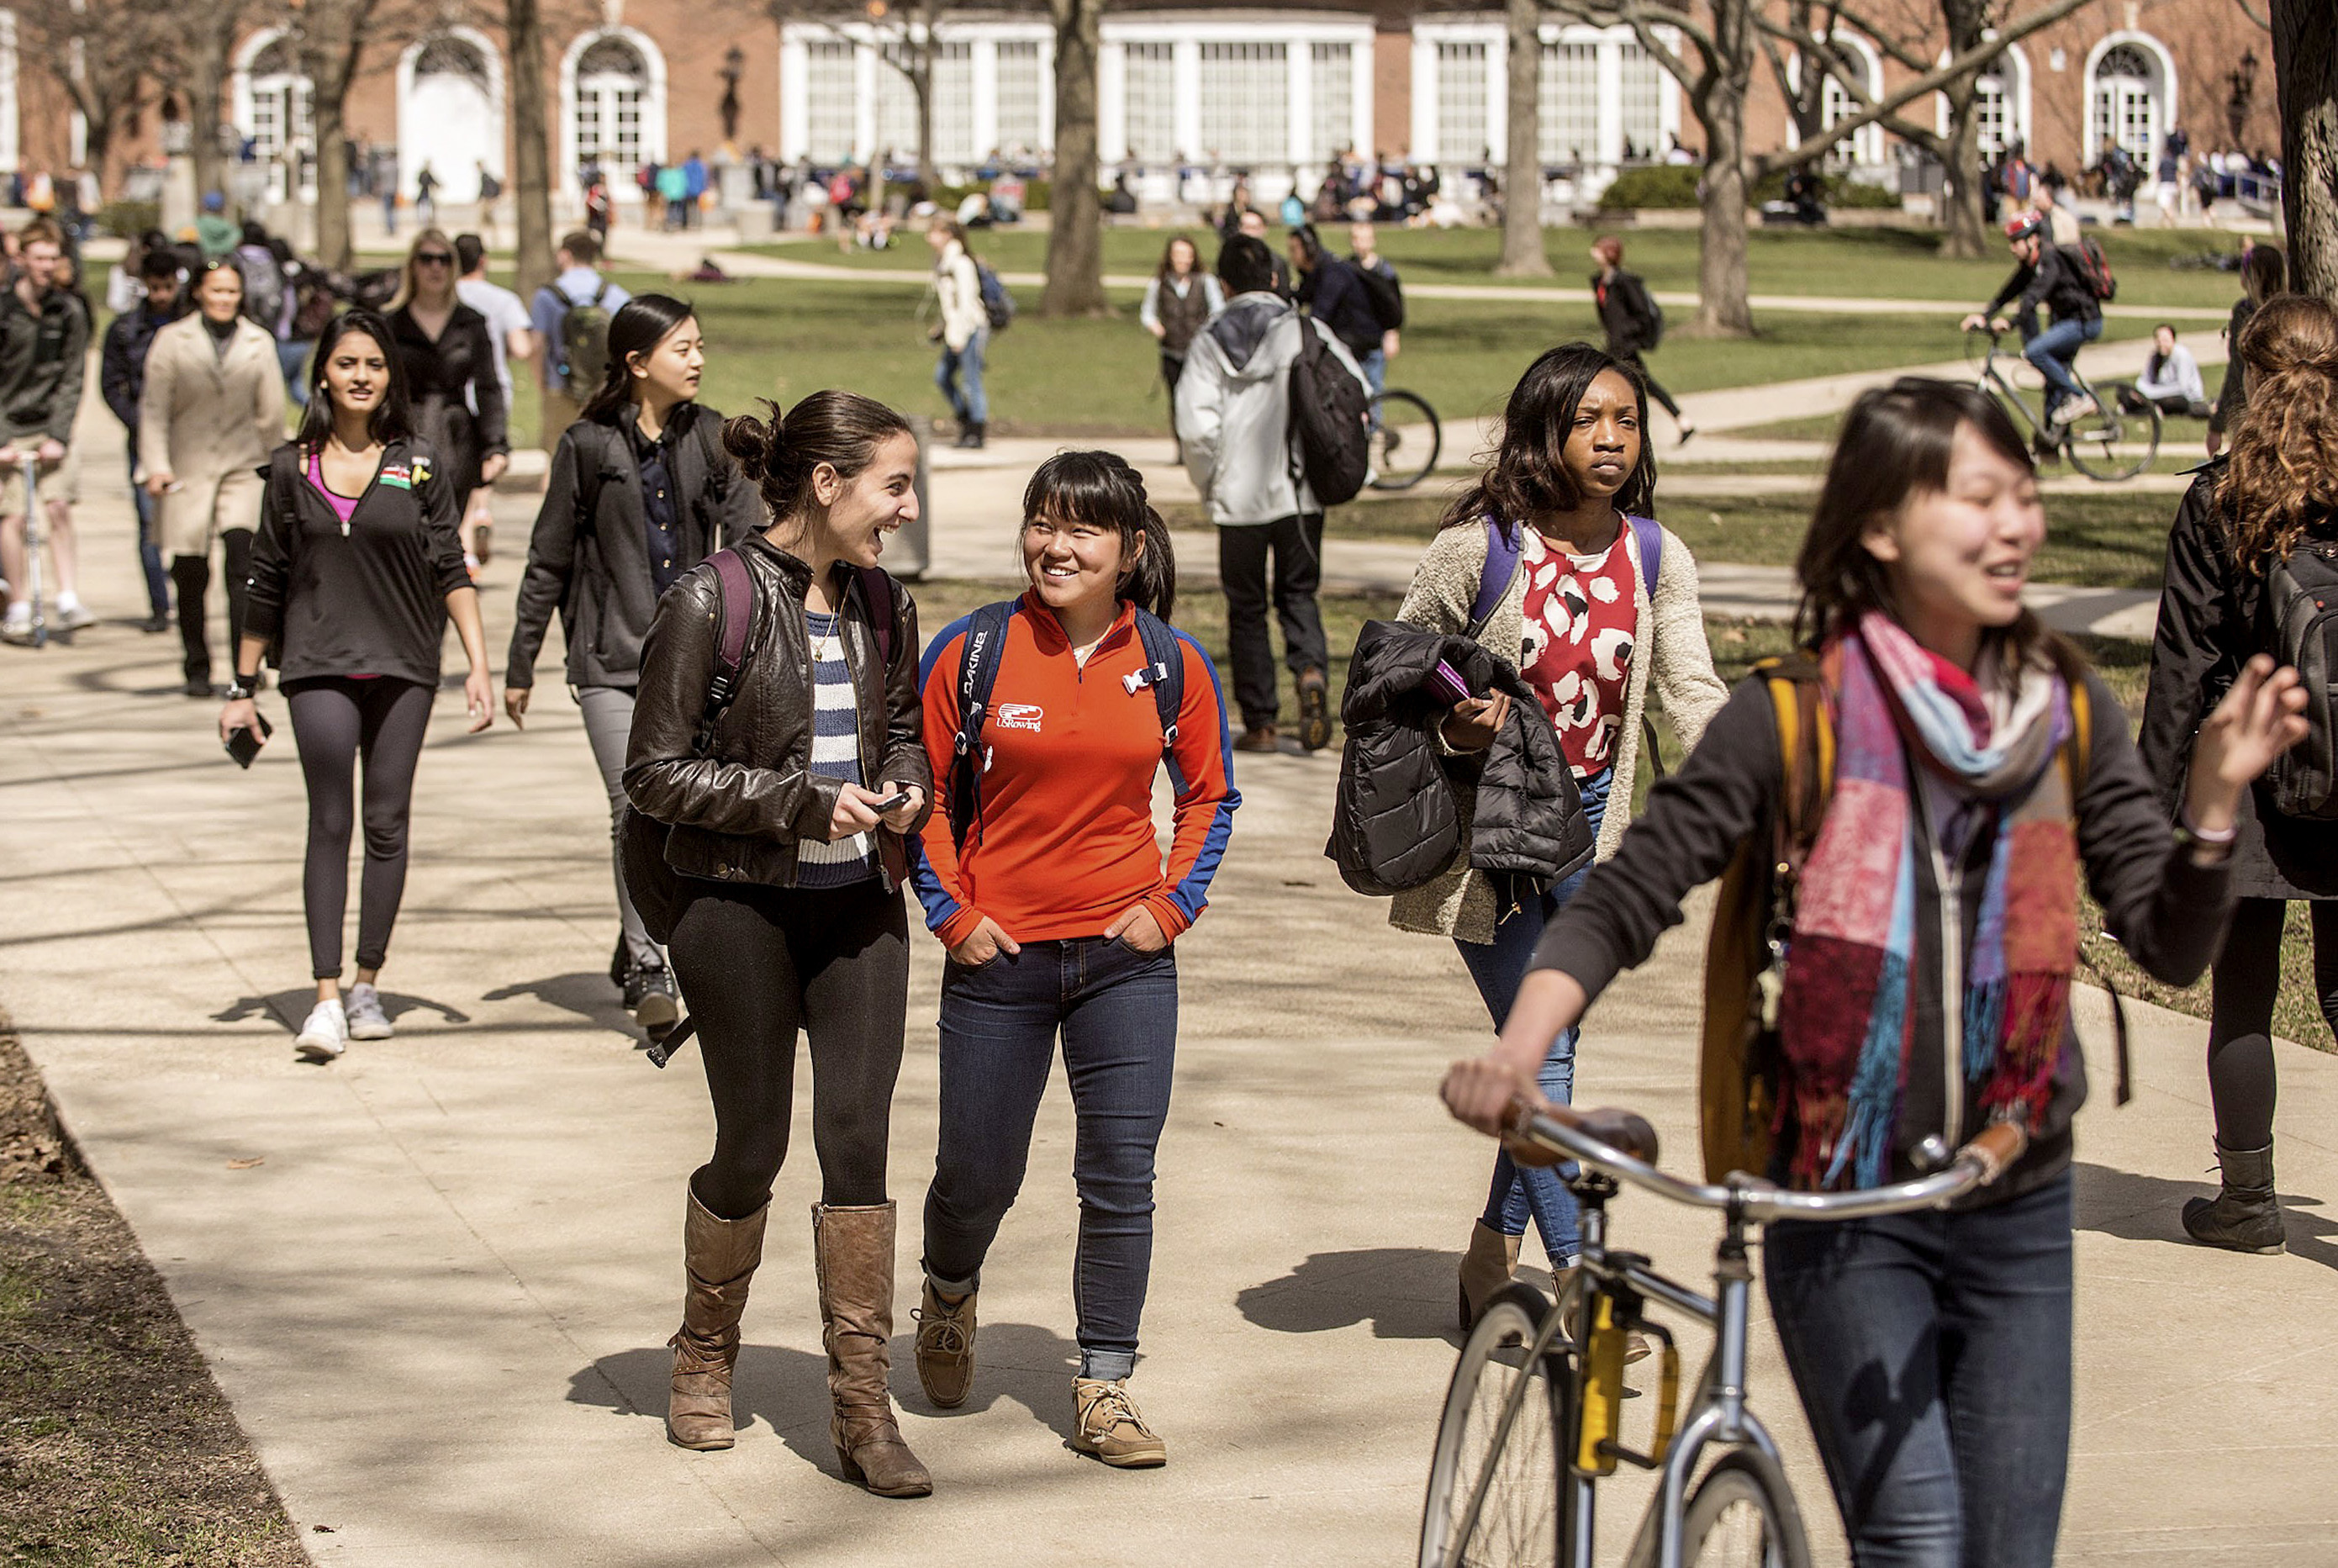 Students walk across the Quad on the University of Illinois campus in Urbana, Ill.